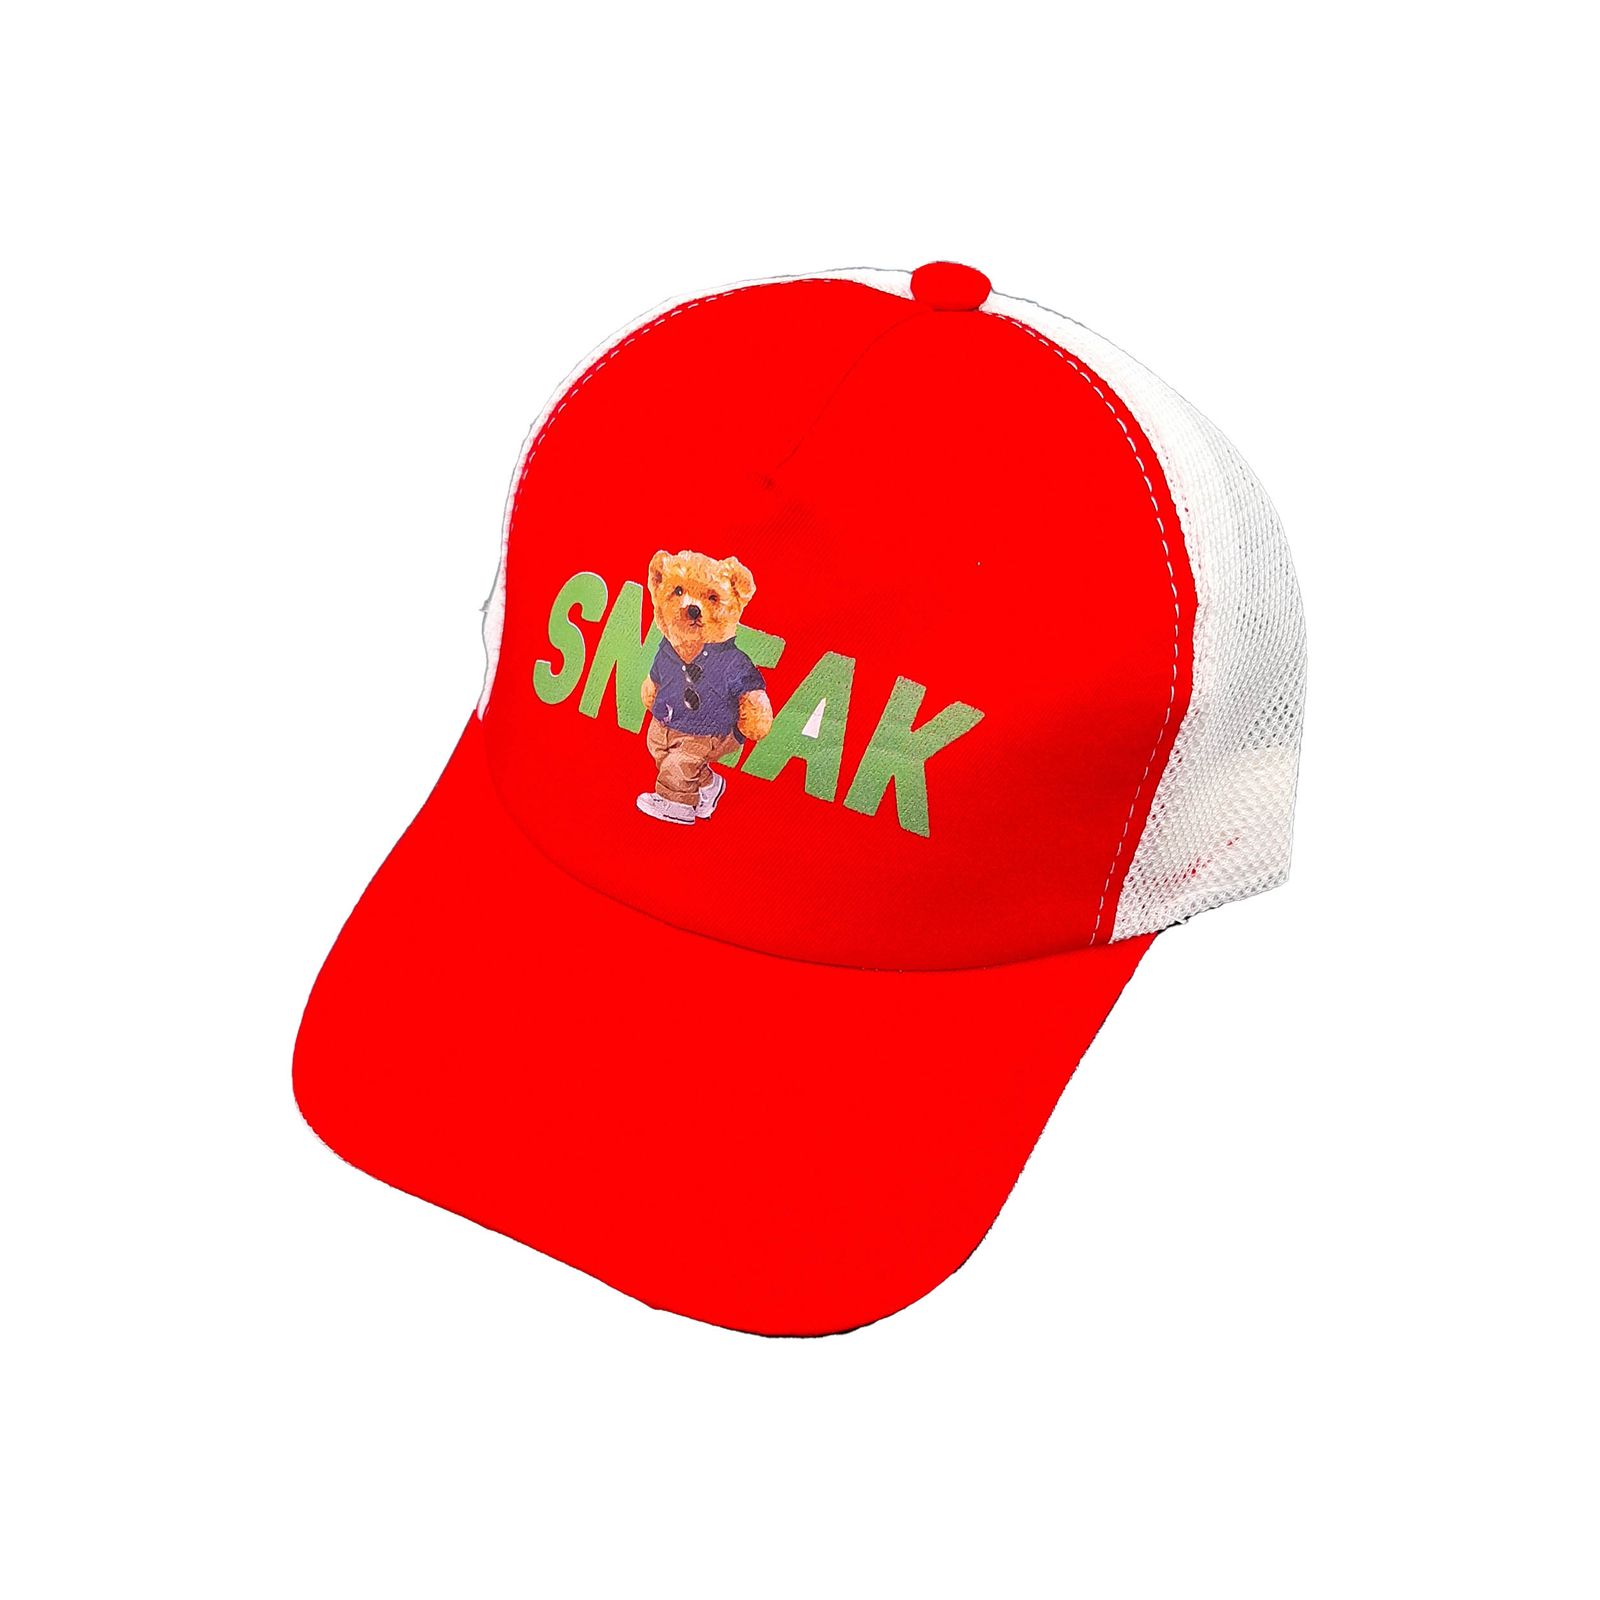 کلاه کپ بچگانه مدل SNAK کد 1210 رنگ قرمز -  - 1